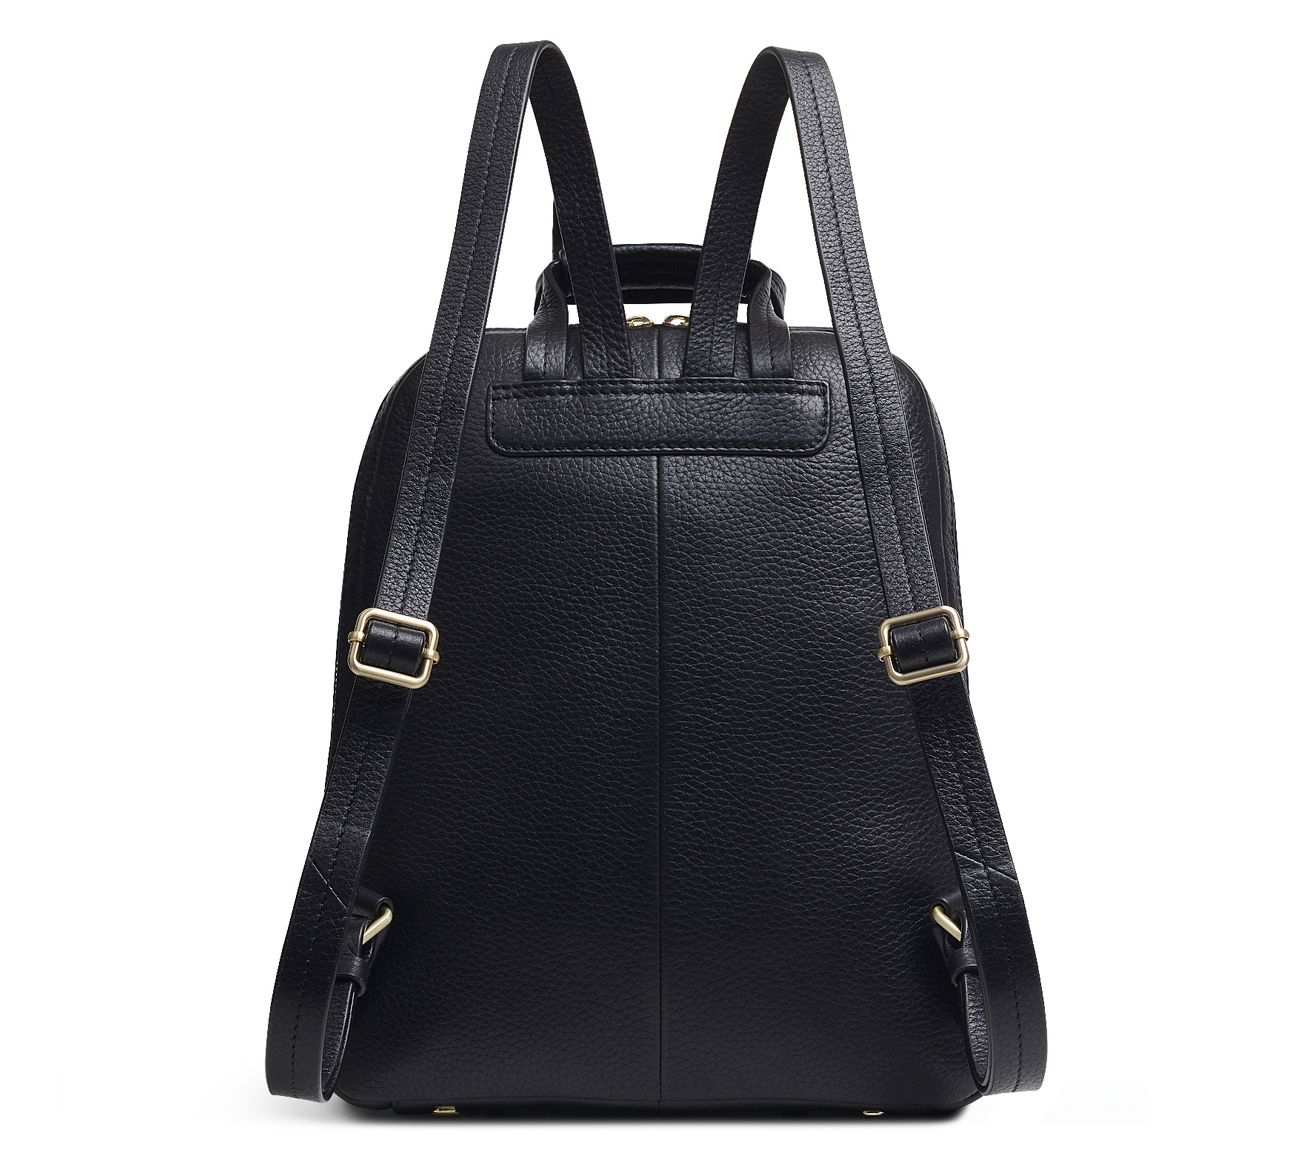 RADLEY London Dukes Place Medium Leather Zip Backpack - QVC.com